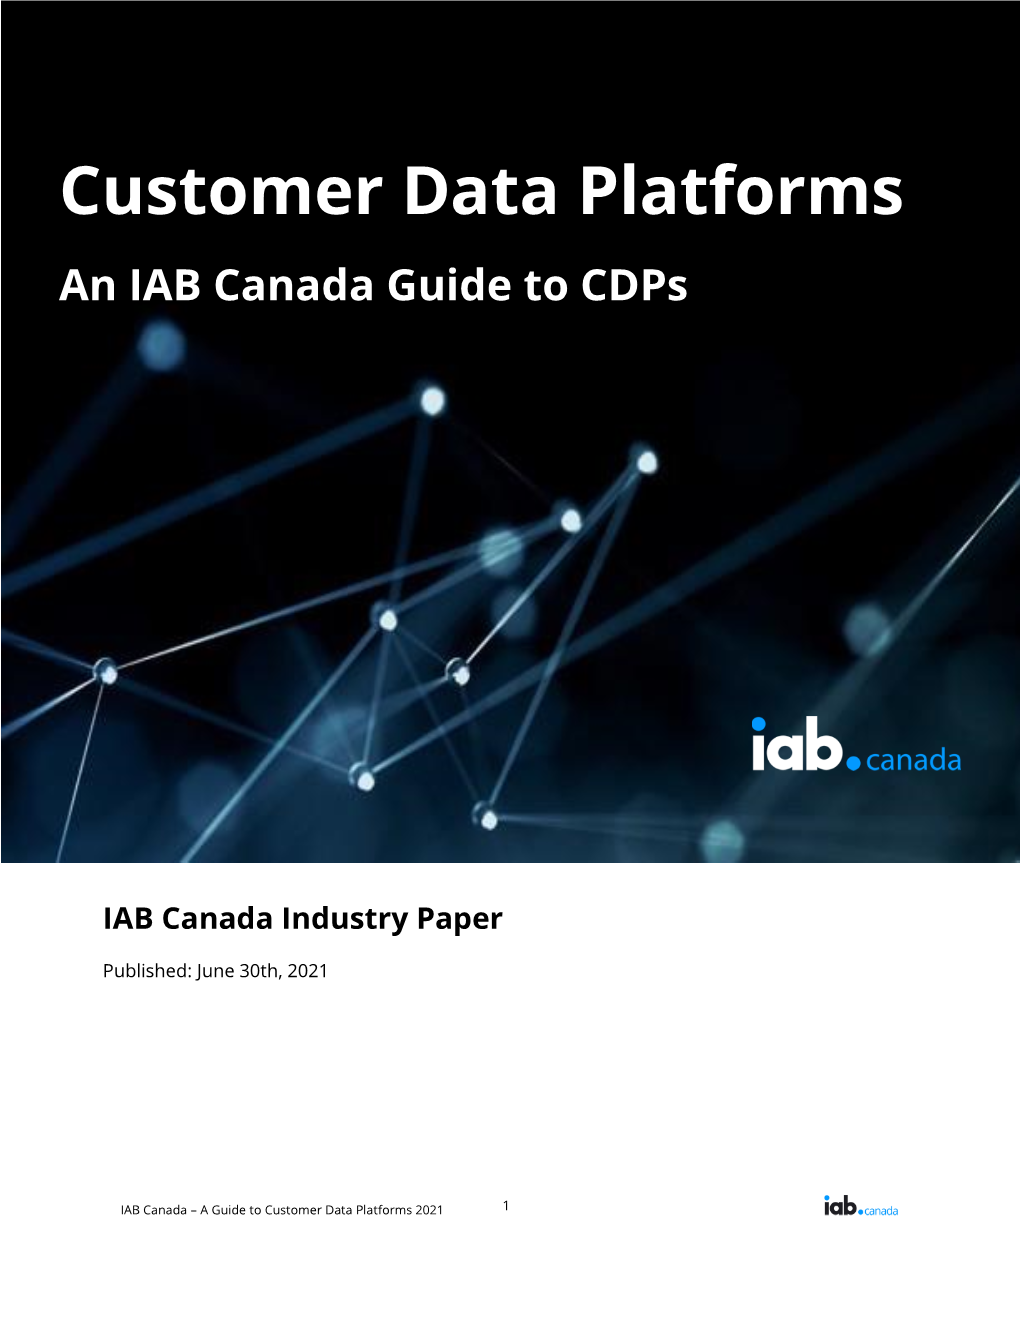 Customer Data Platforms an IAB Canada Guide to Cdps